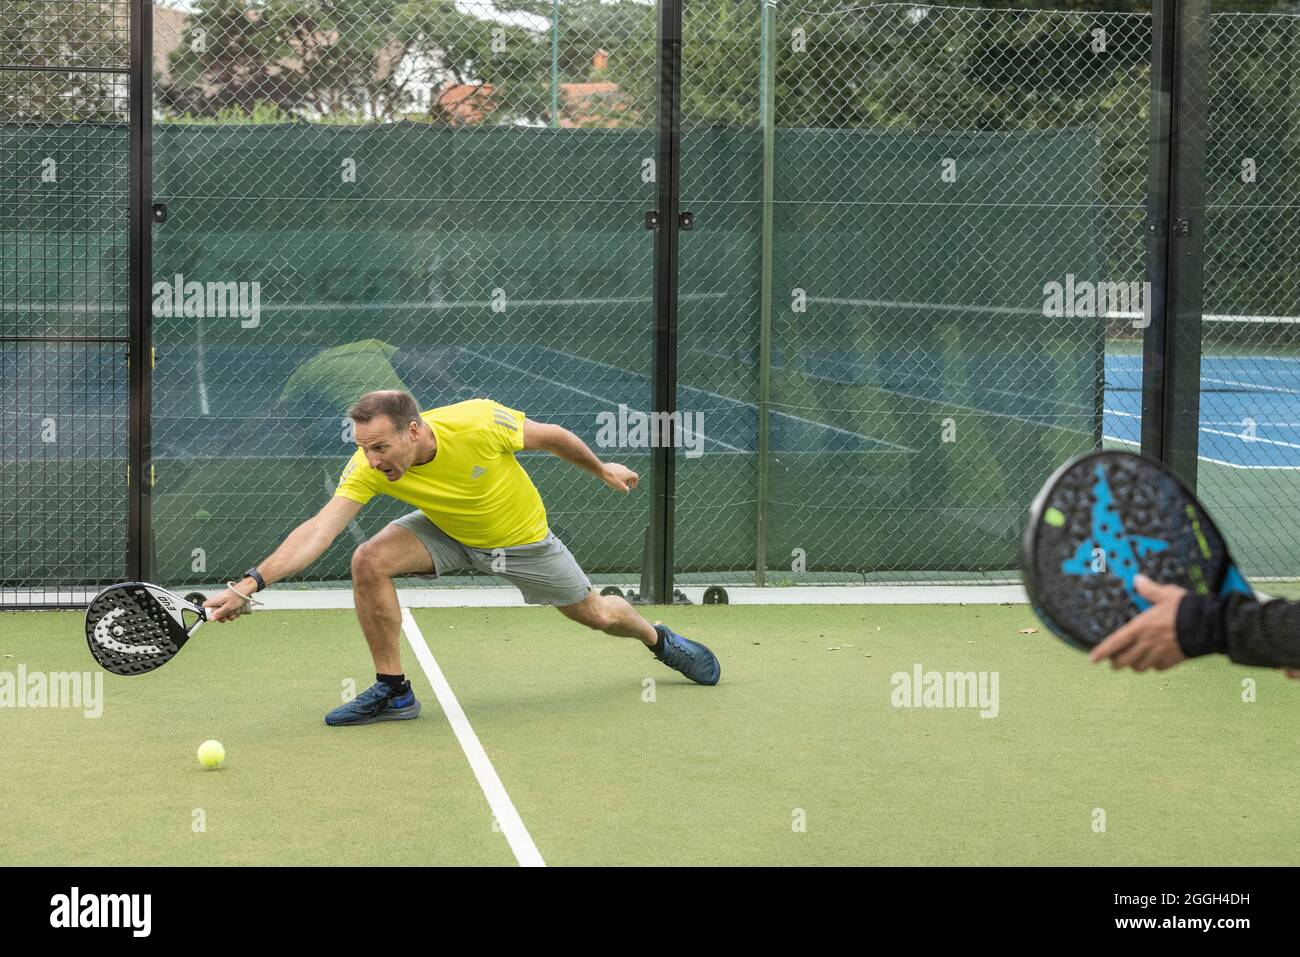 Members of the Ashtead Tennis and Squash Club playing Padel tennis. 27th August 2021 Ashtead, Surrey, UK Stock Photo